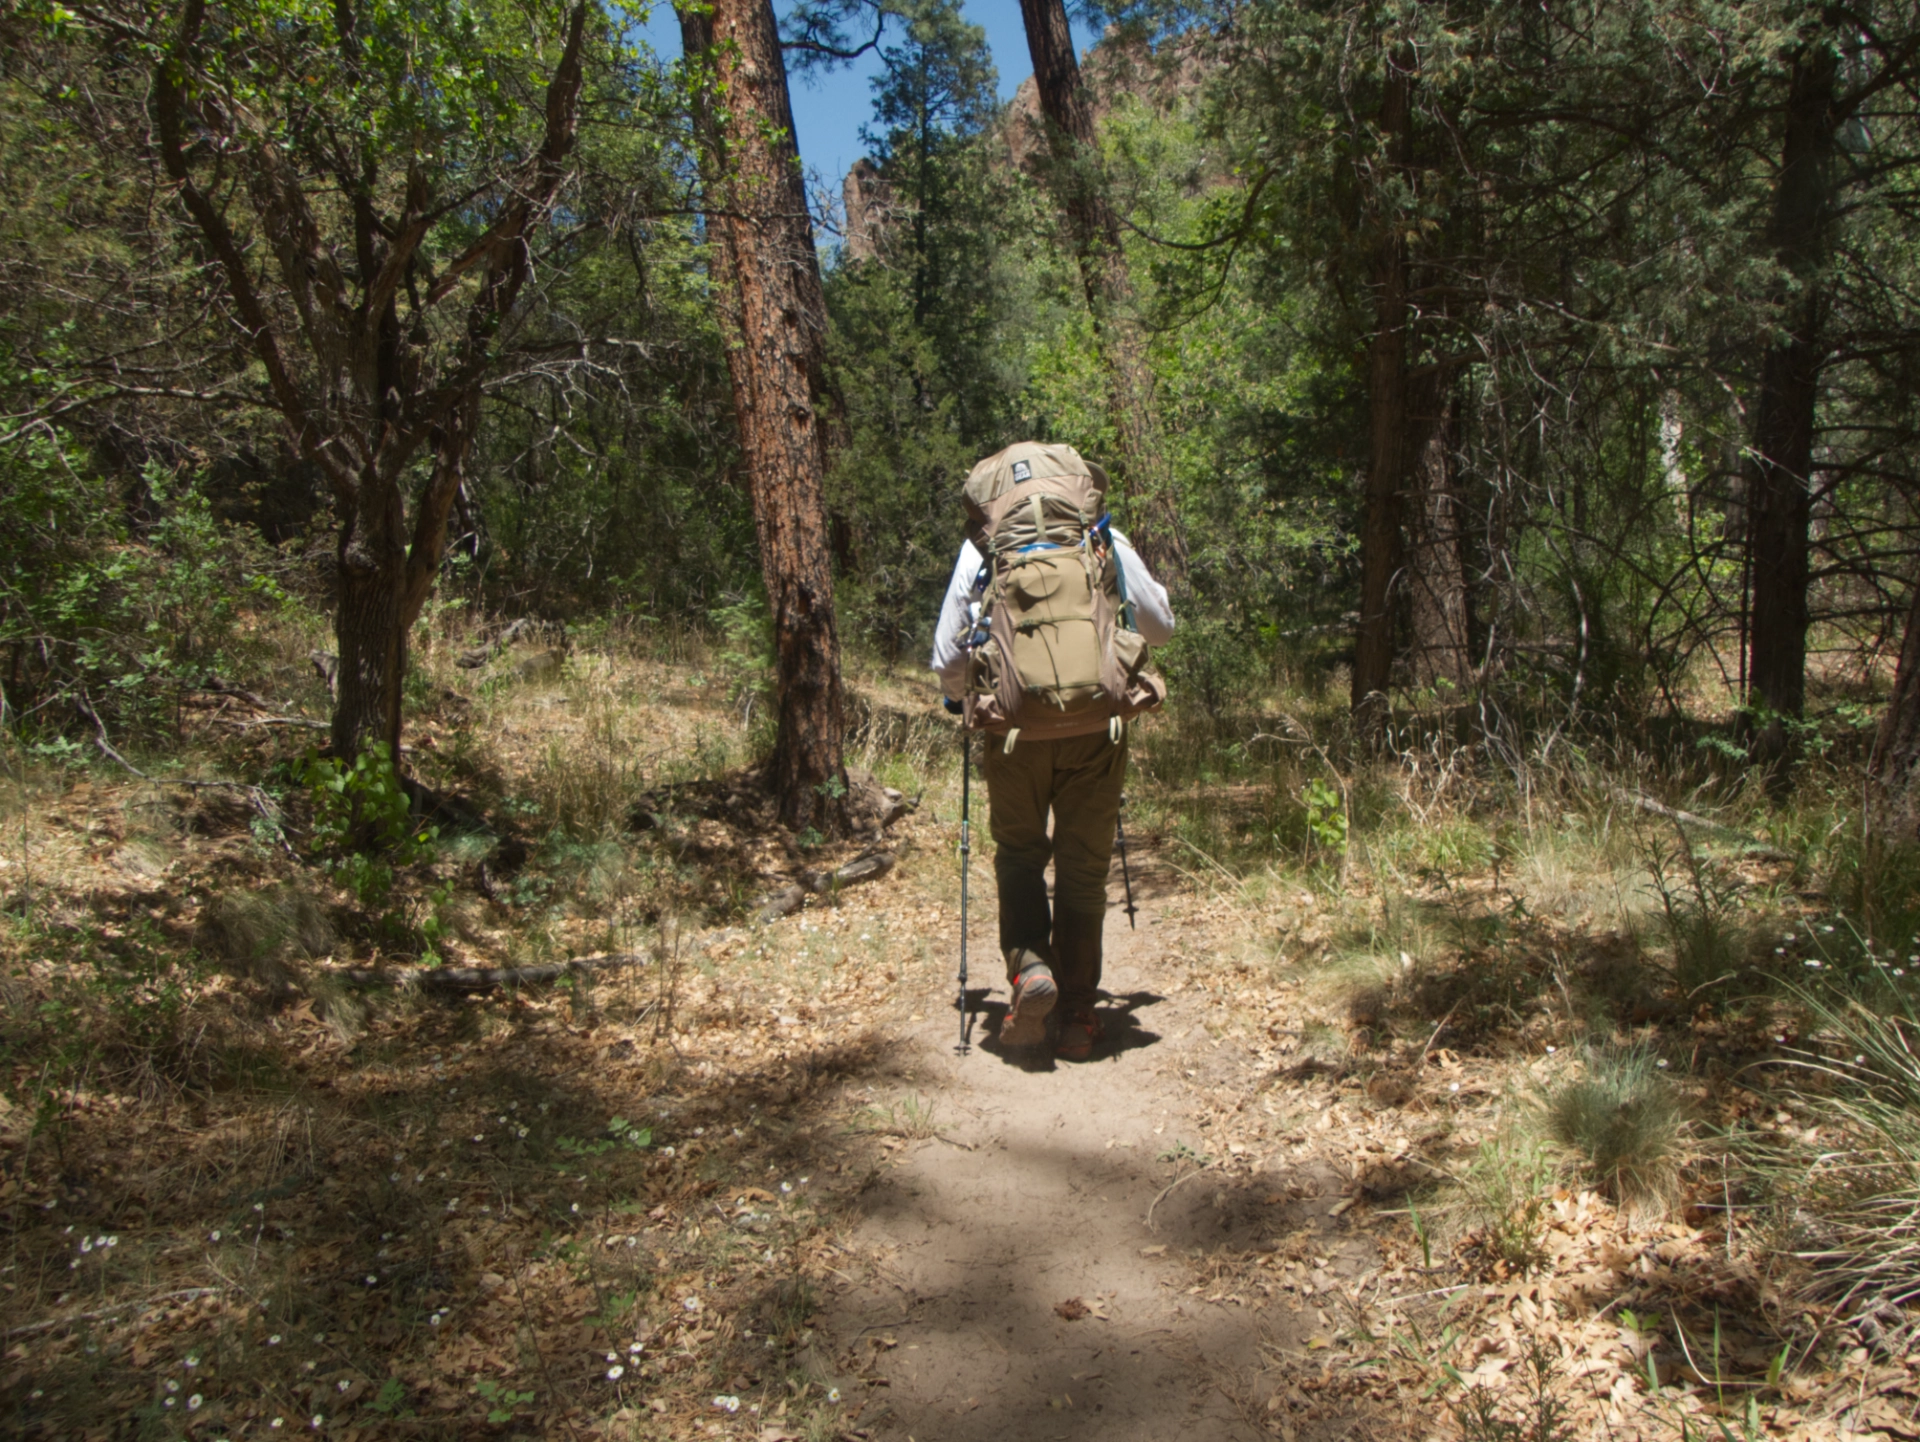 Dennis hiking in ponderosa pine forest